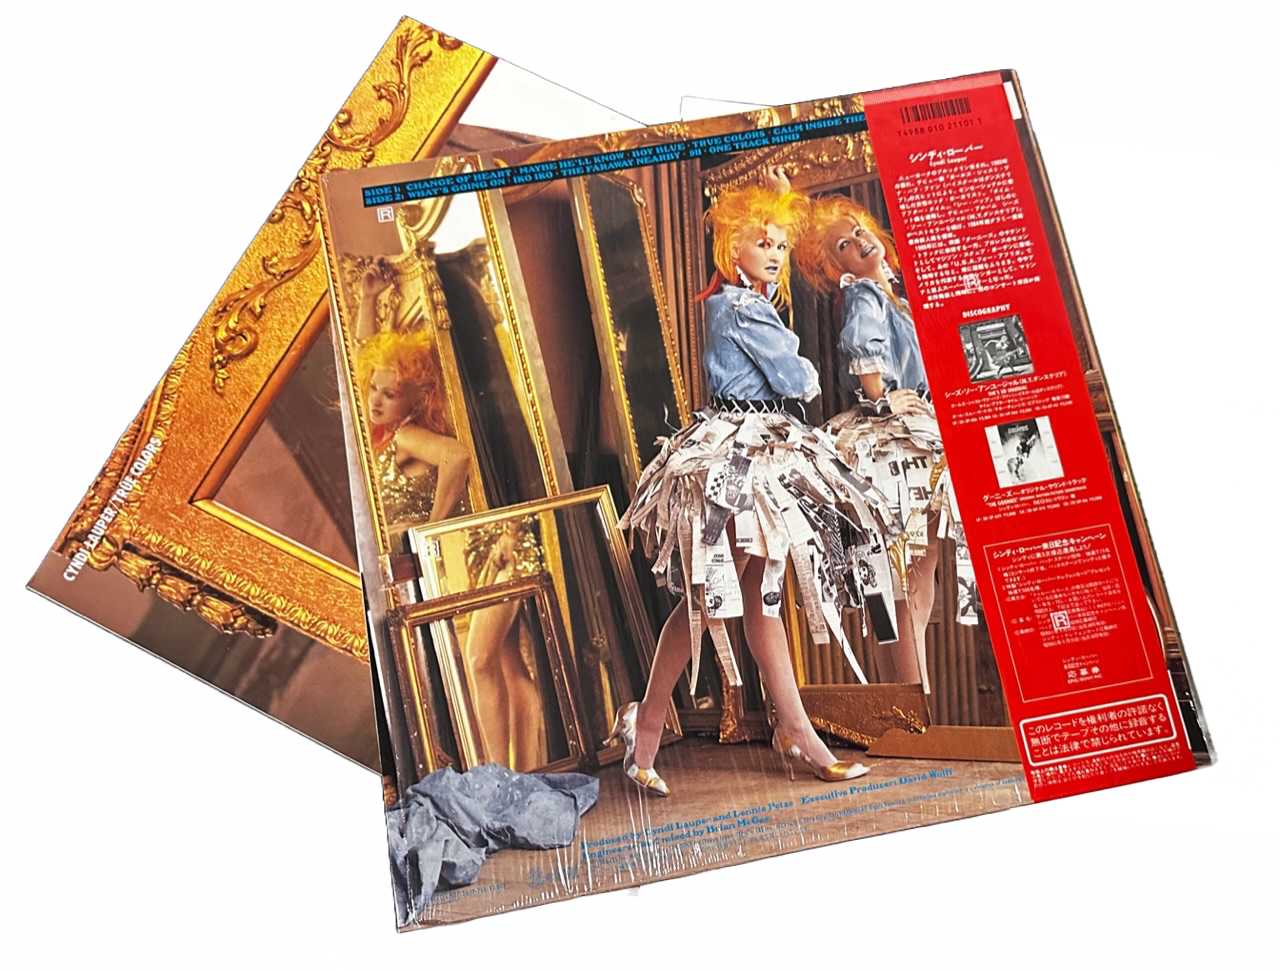 Cyndi Lauper - True Colors [Japanese Vinyl LP] w Poster